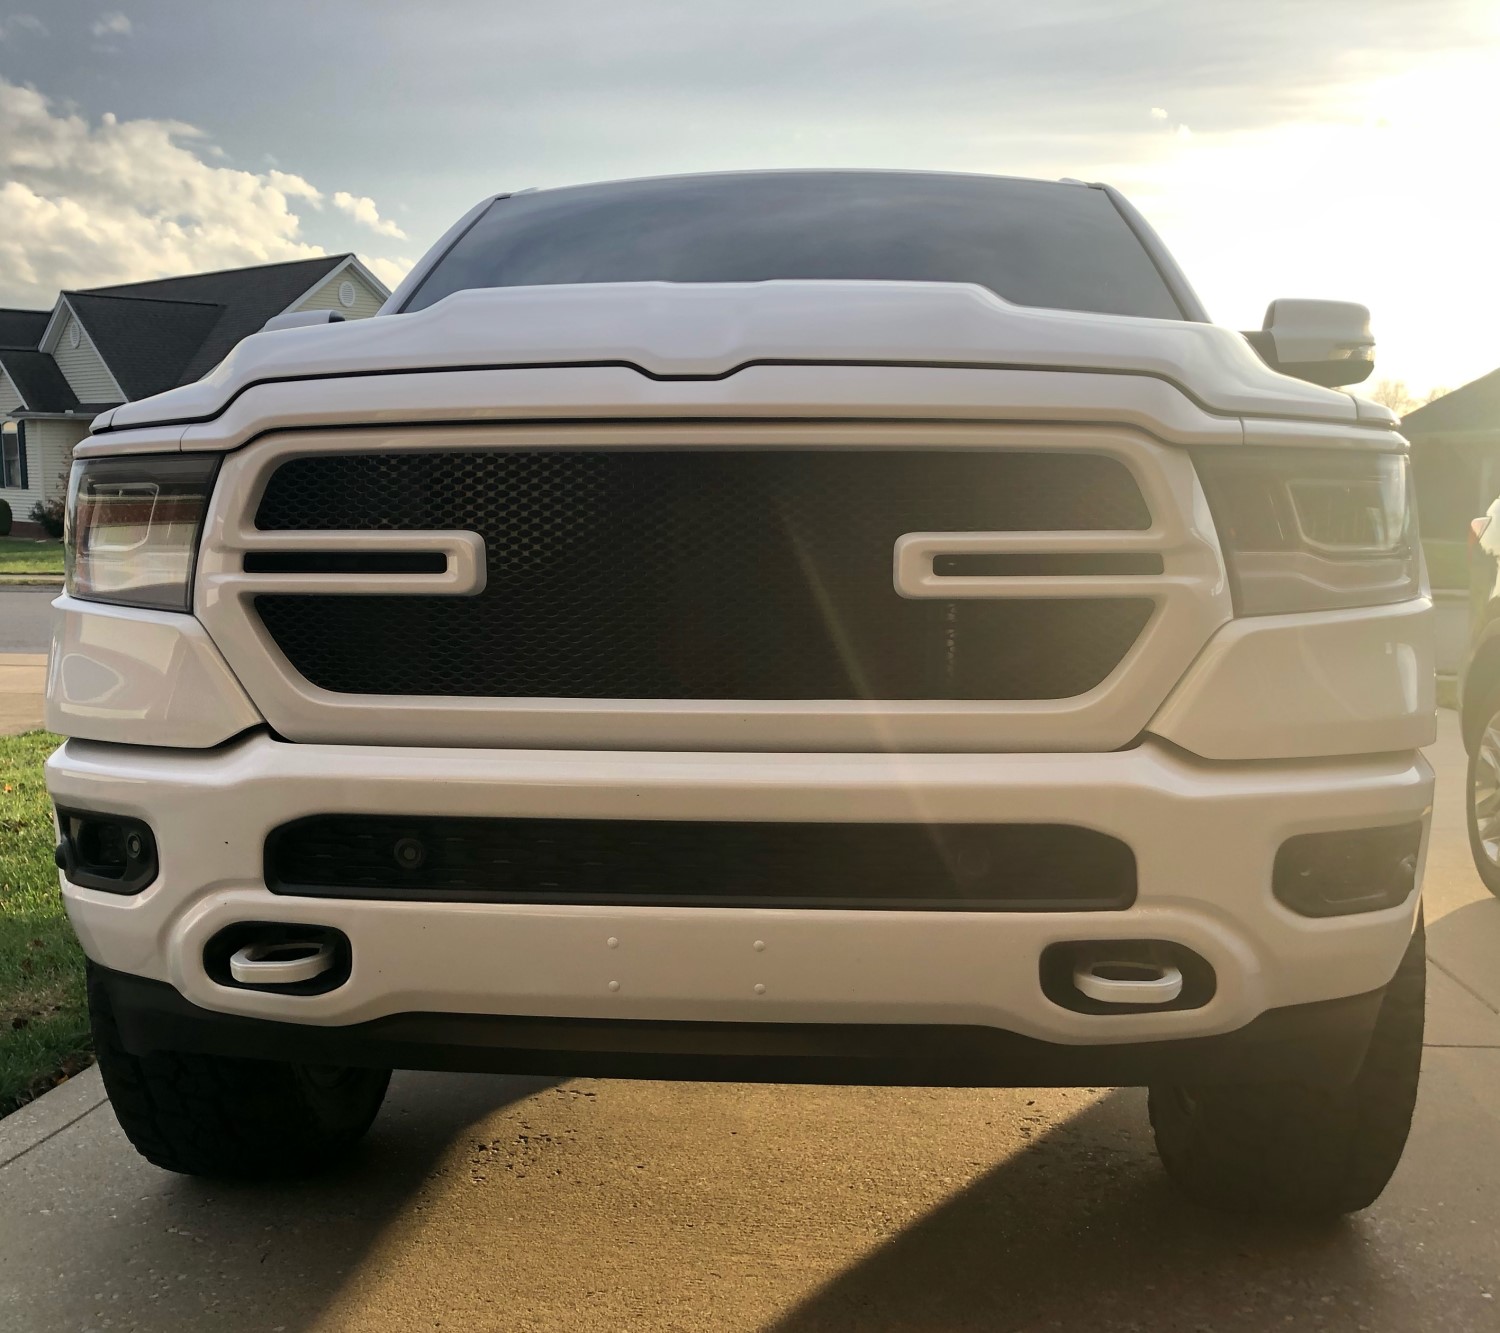 Bold and Minimalistic: Custom Plain Grille Upgrade for 2019+ Dodge Ram